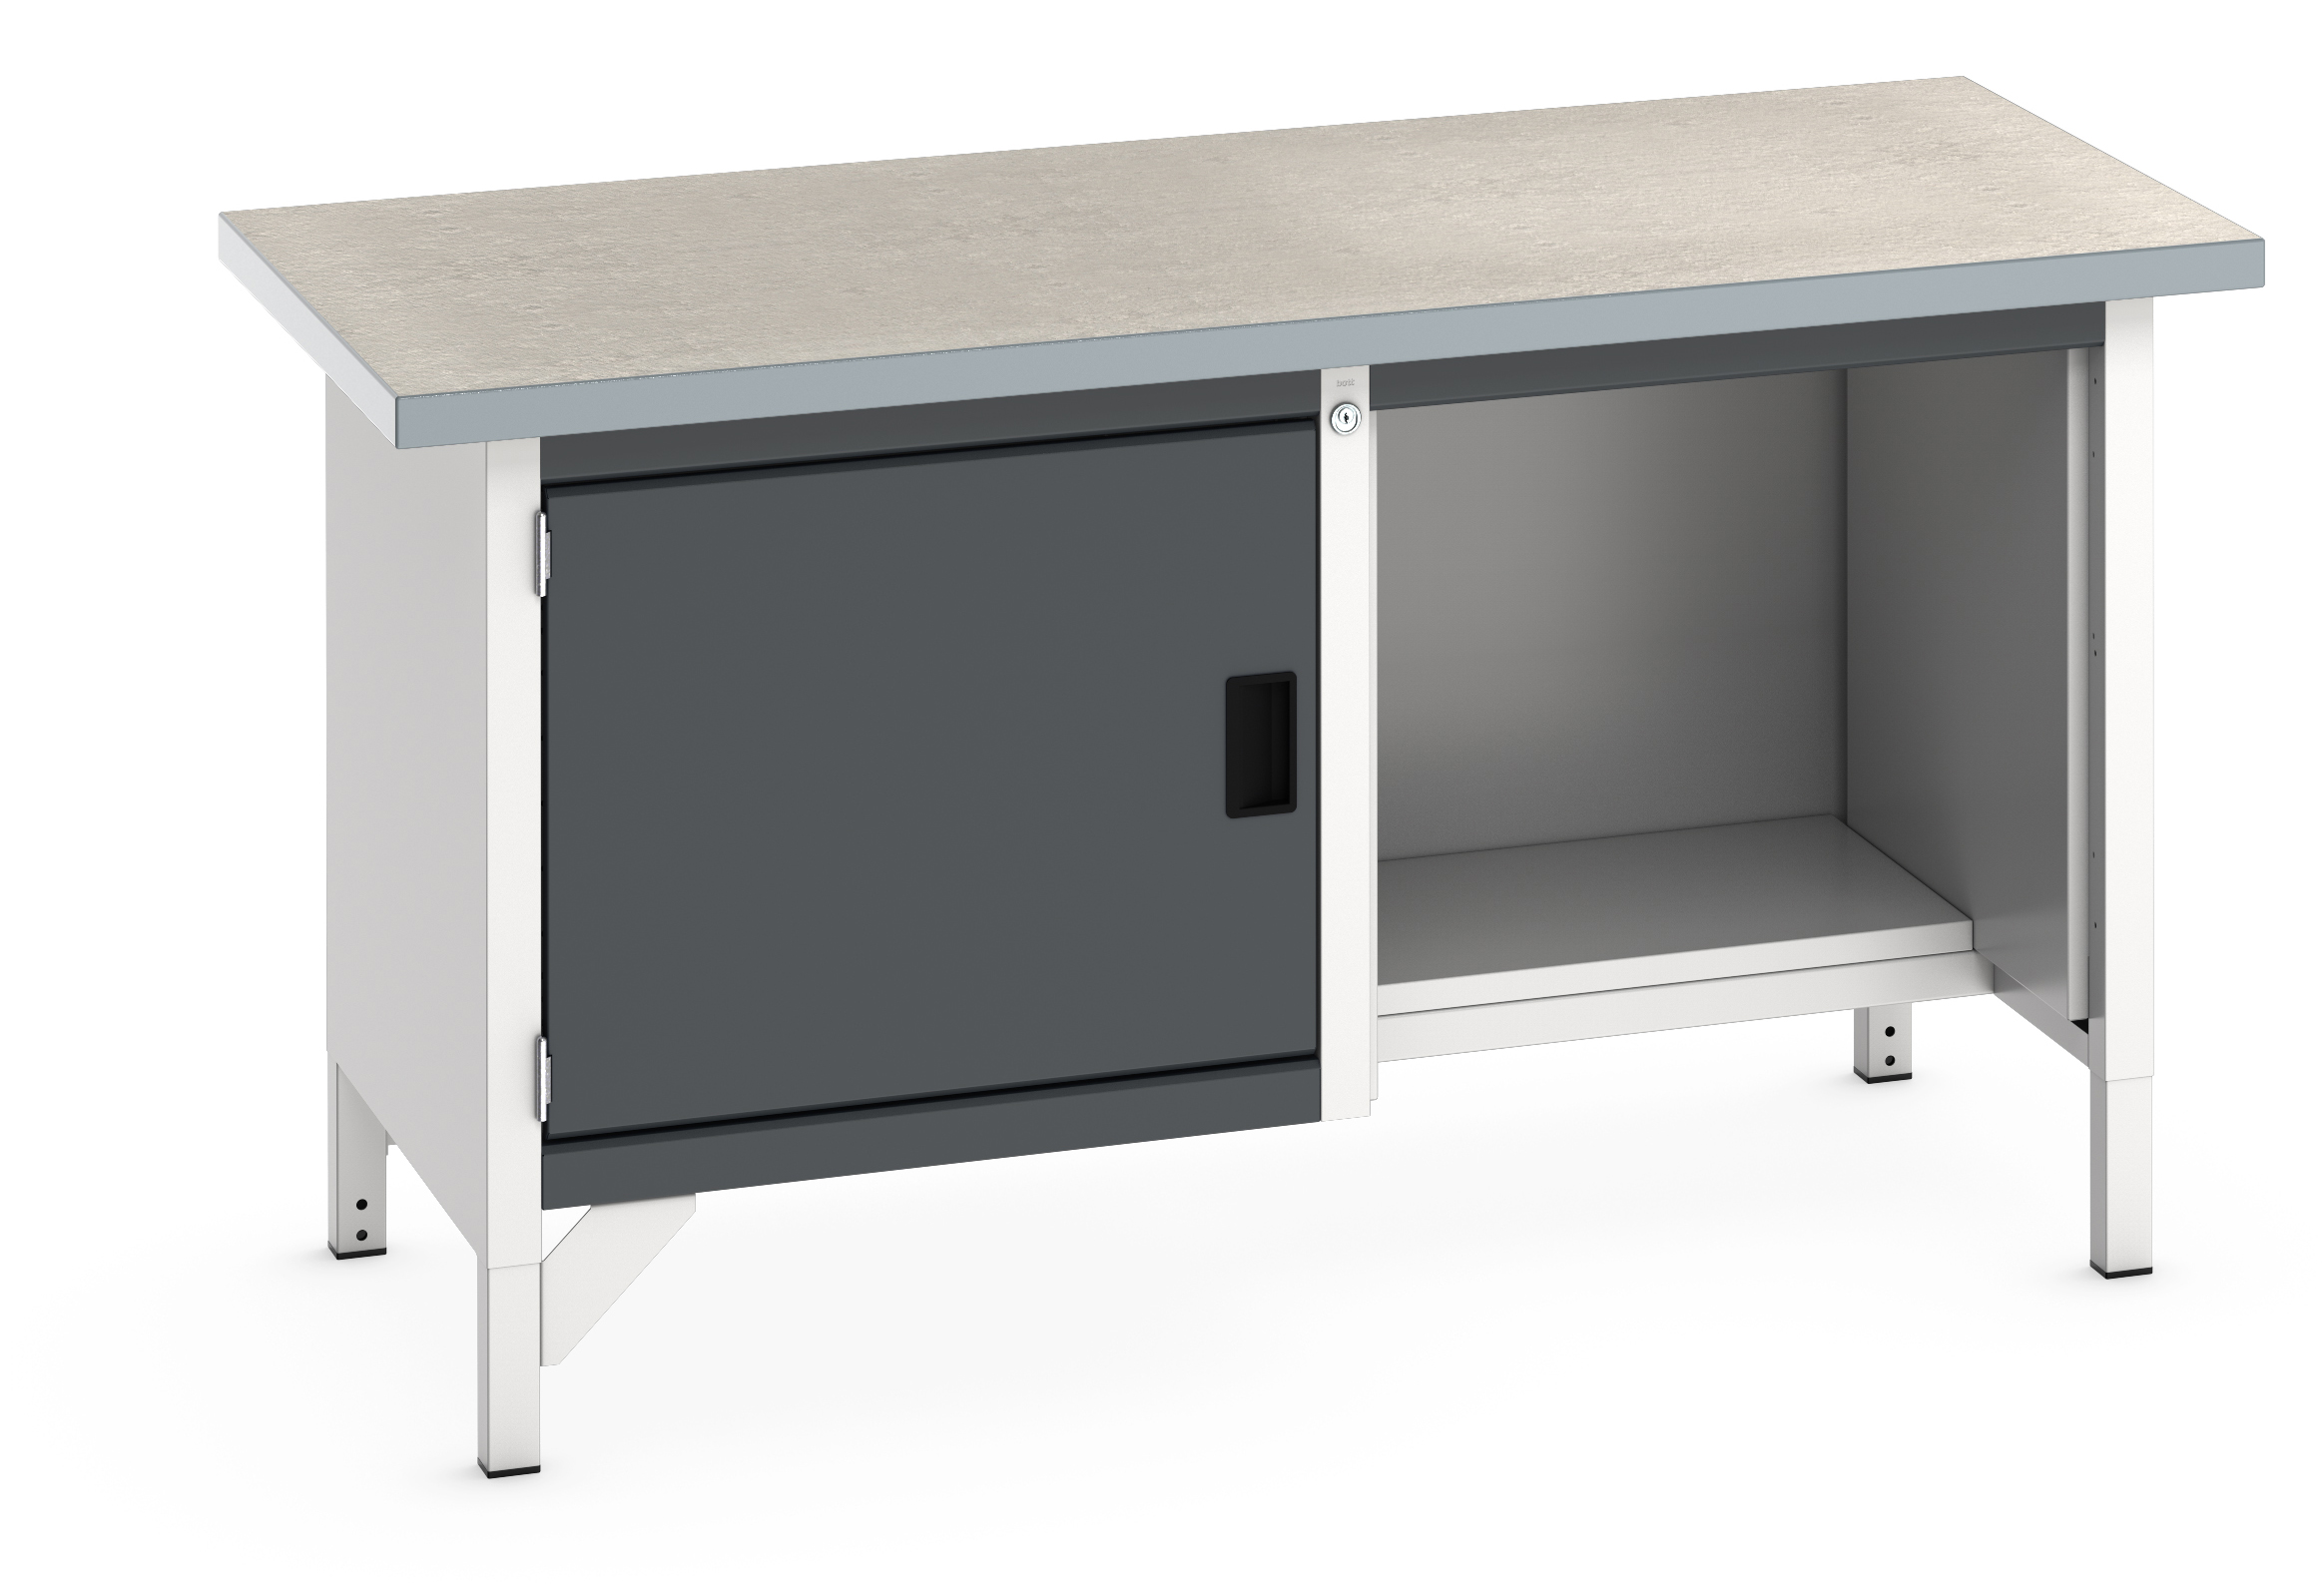 Bott Cubio Storage Bench With Full Cupboard / Open With Half Depth Base Shelf - 41002036.19V